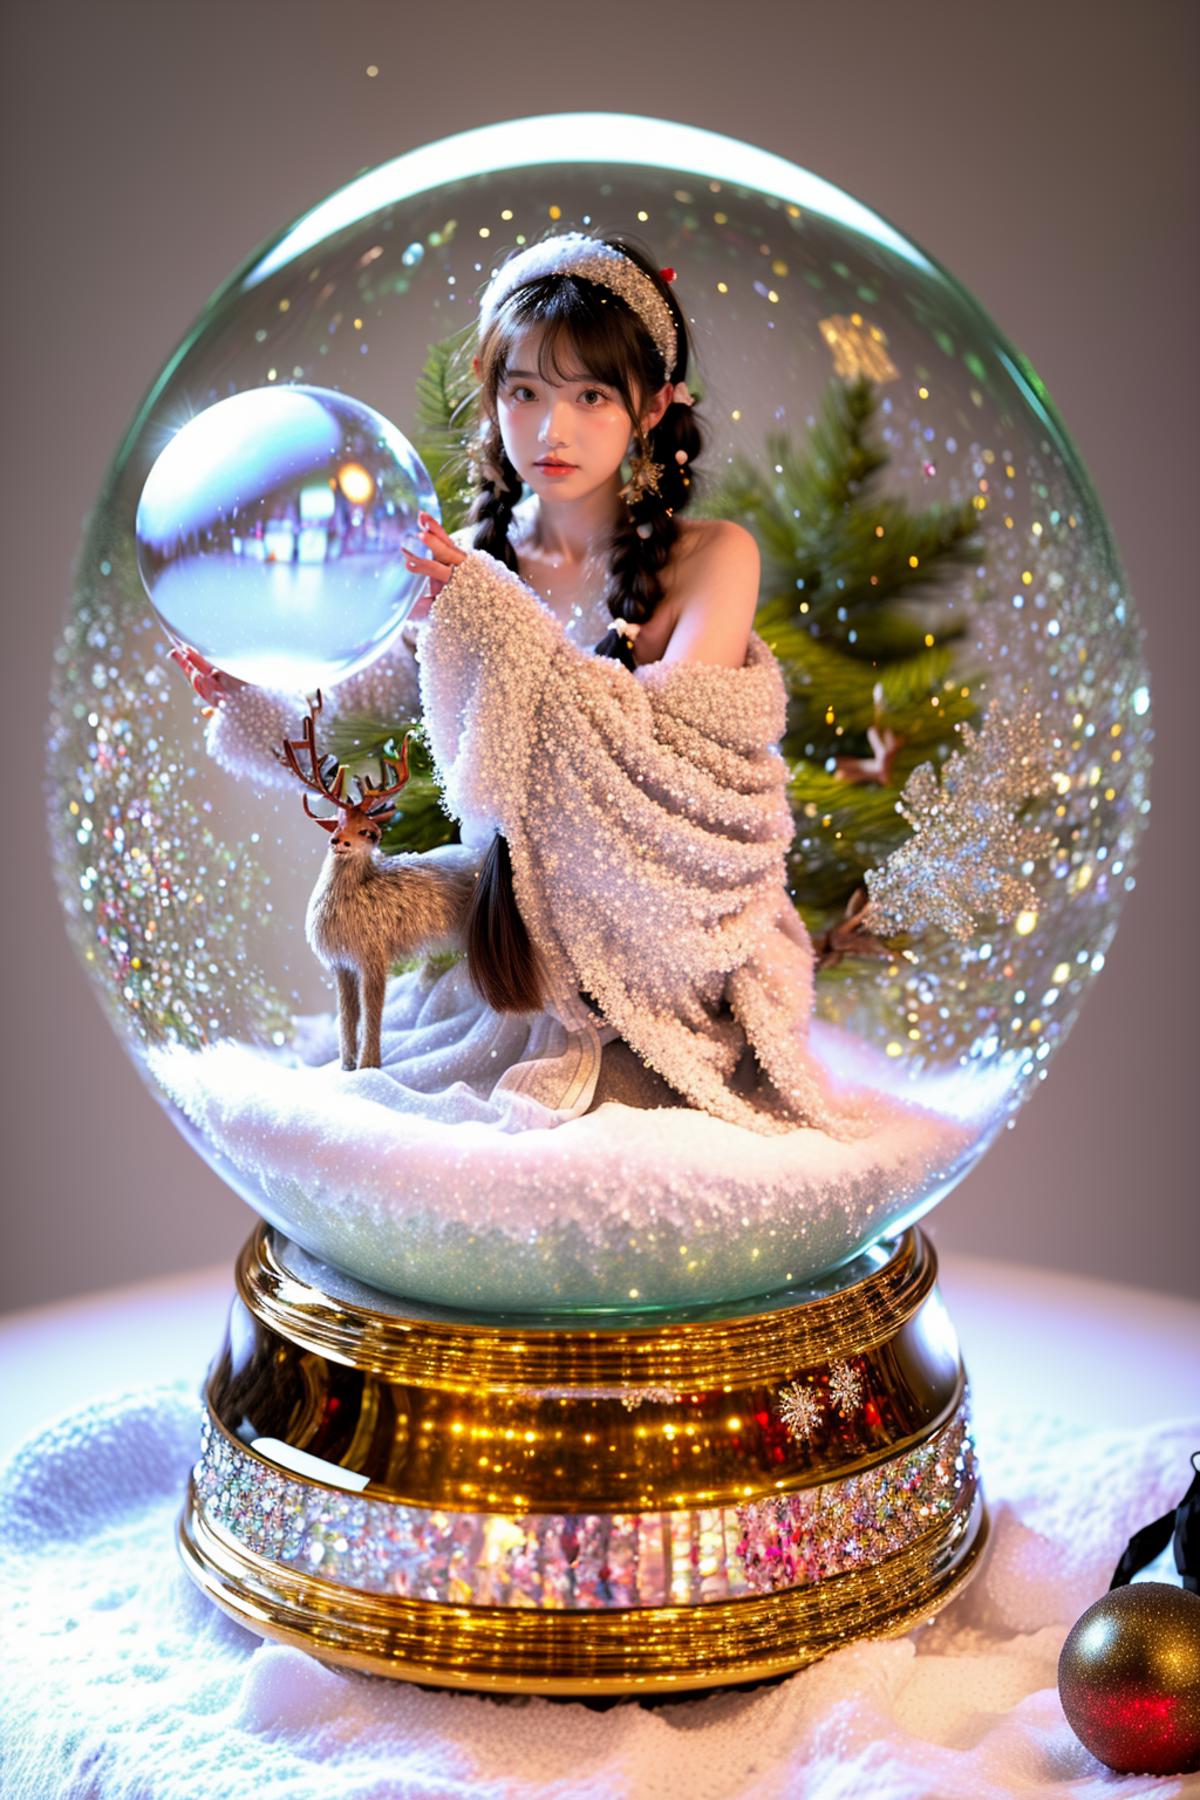 Christmas crystal ball image by MengX